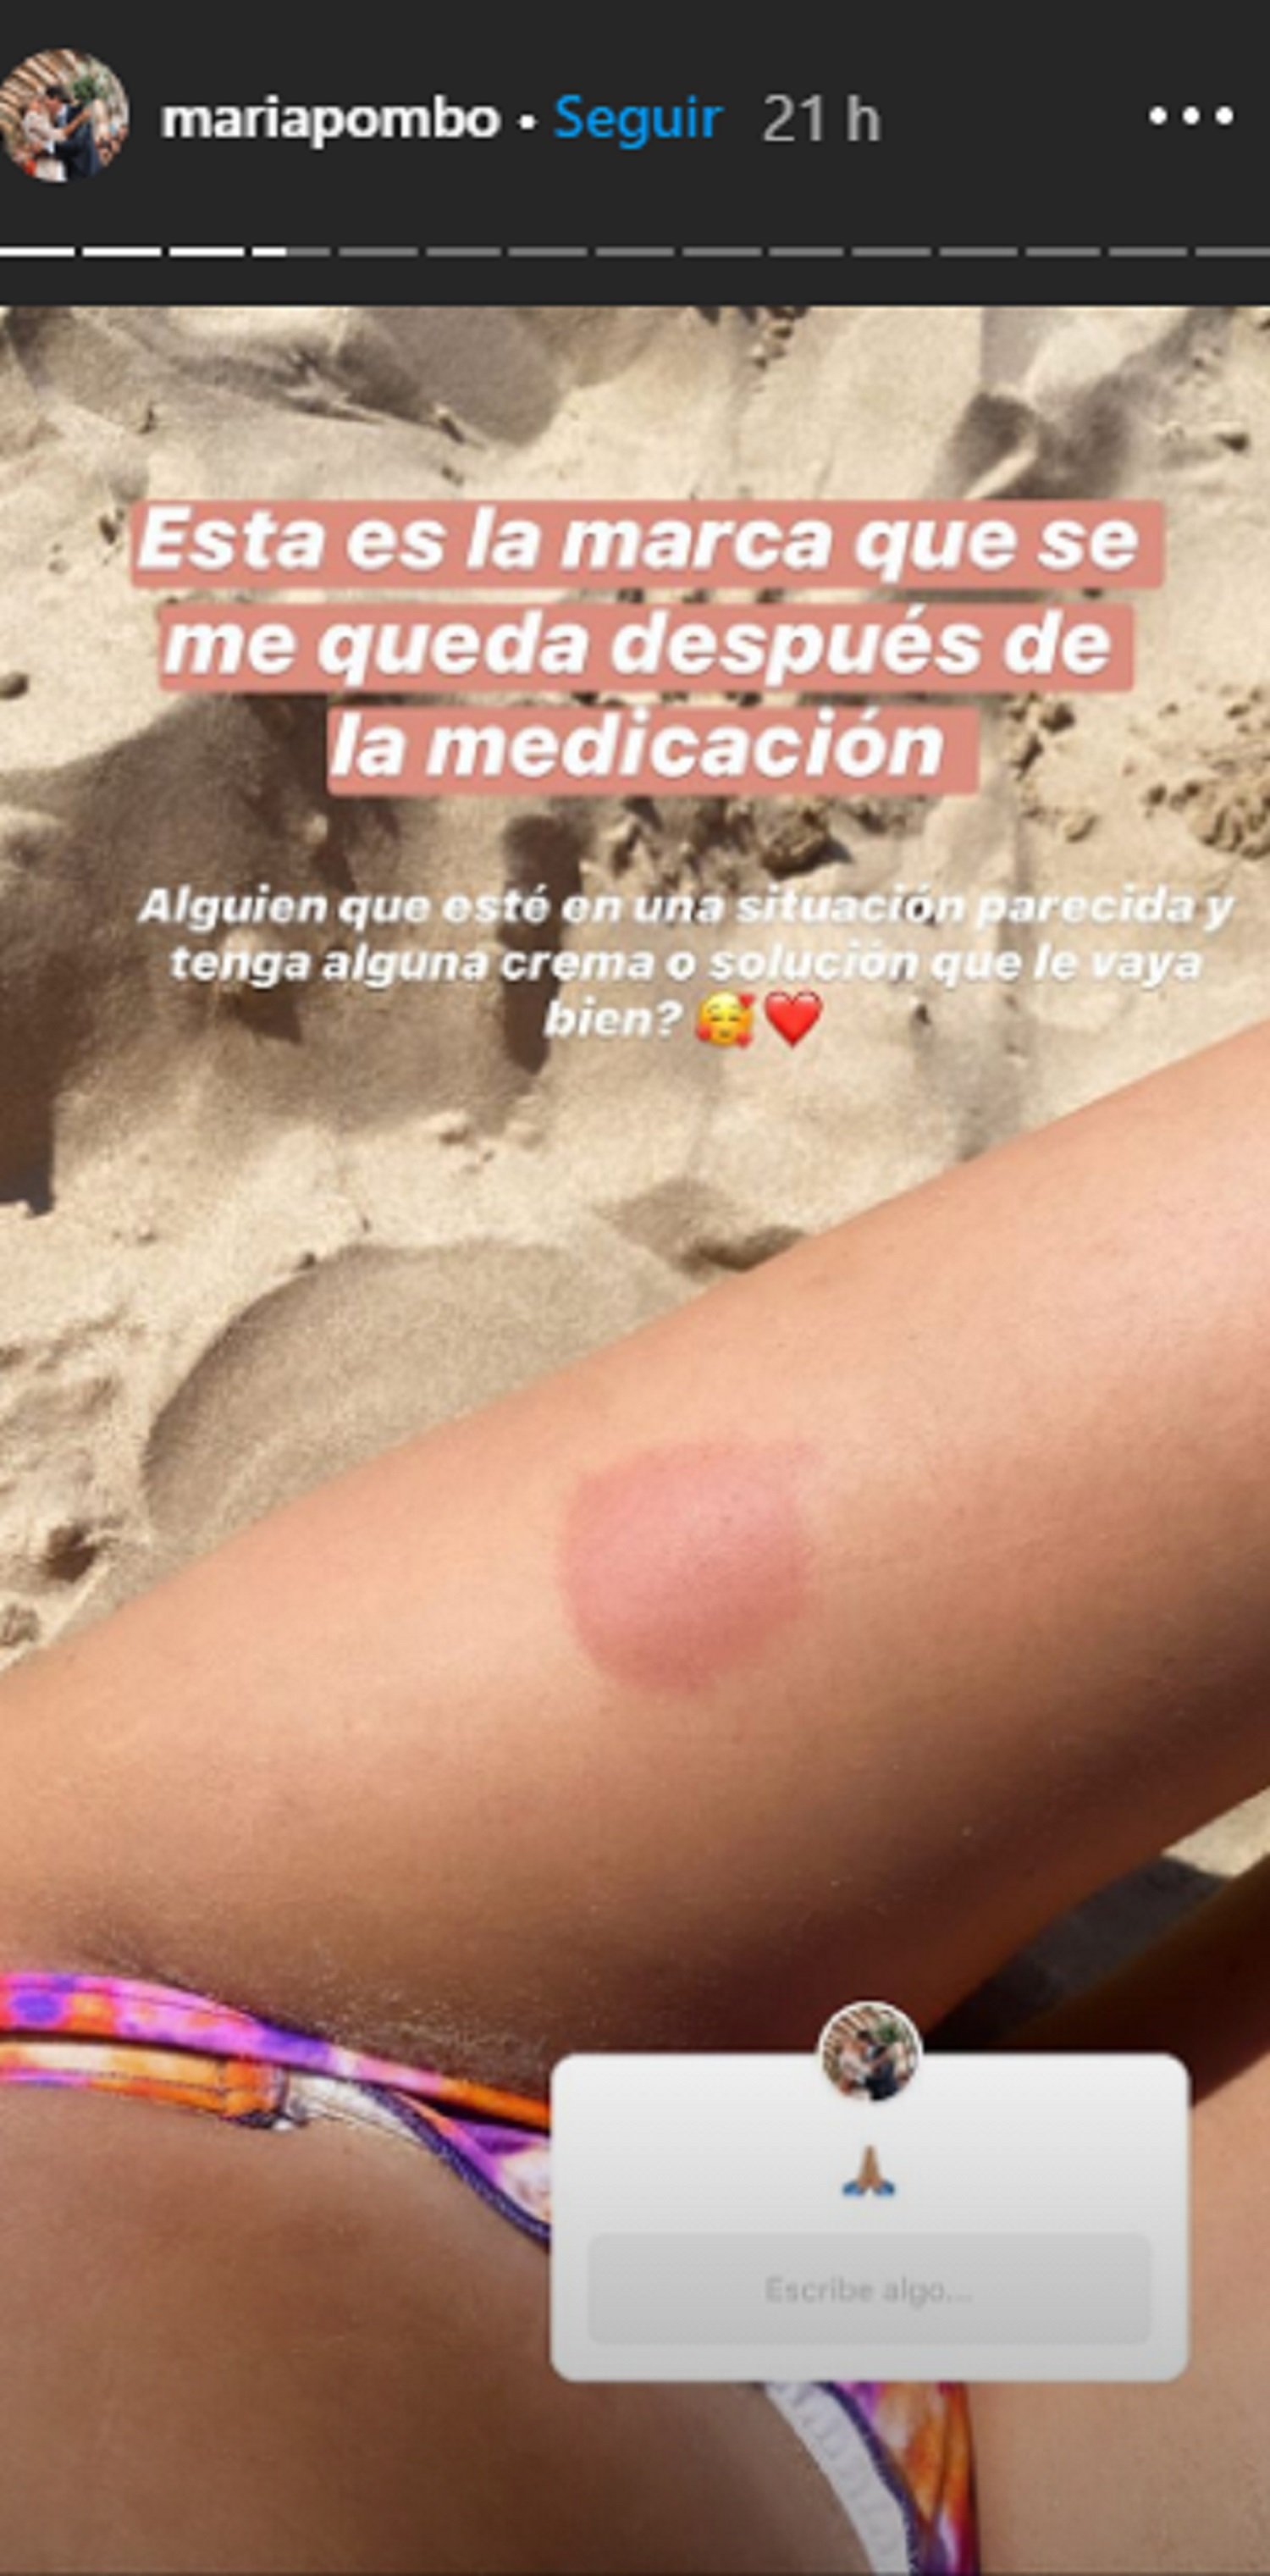 Maria Pombo inyección pierna esclerosis múltiple